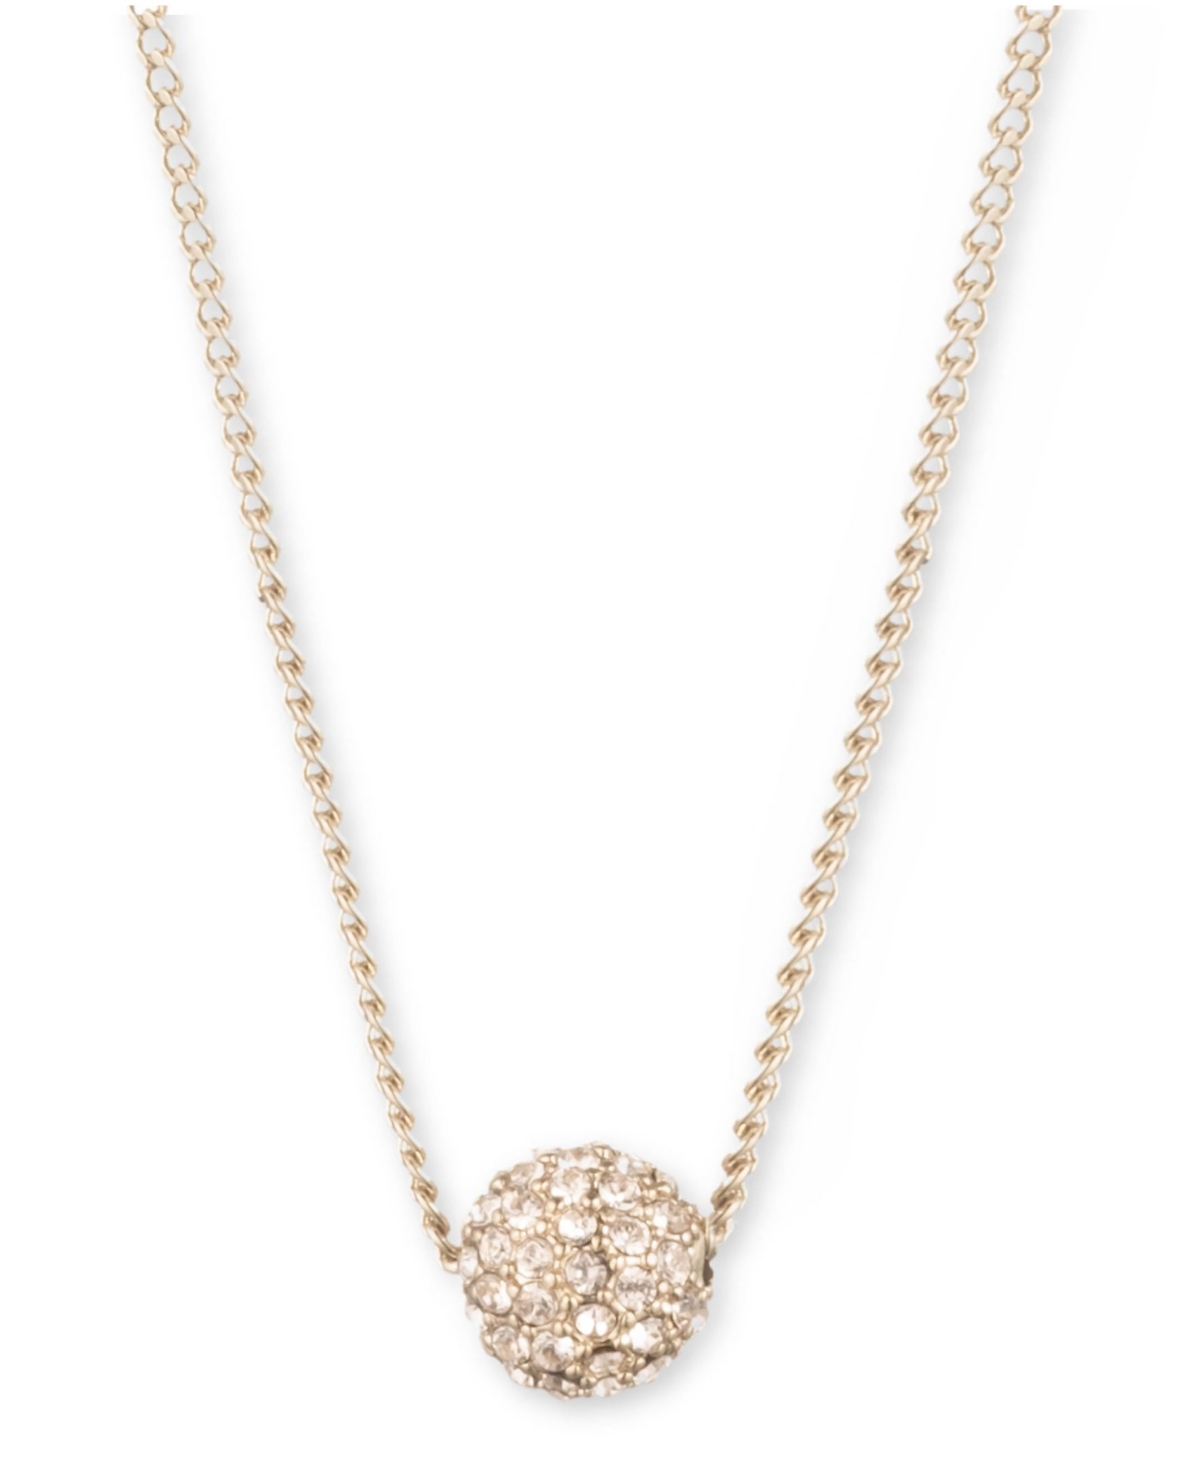 Crystal Fireball Pendant Necklace 16" + 2" extender - Rose Gold